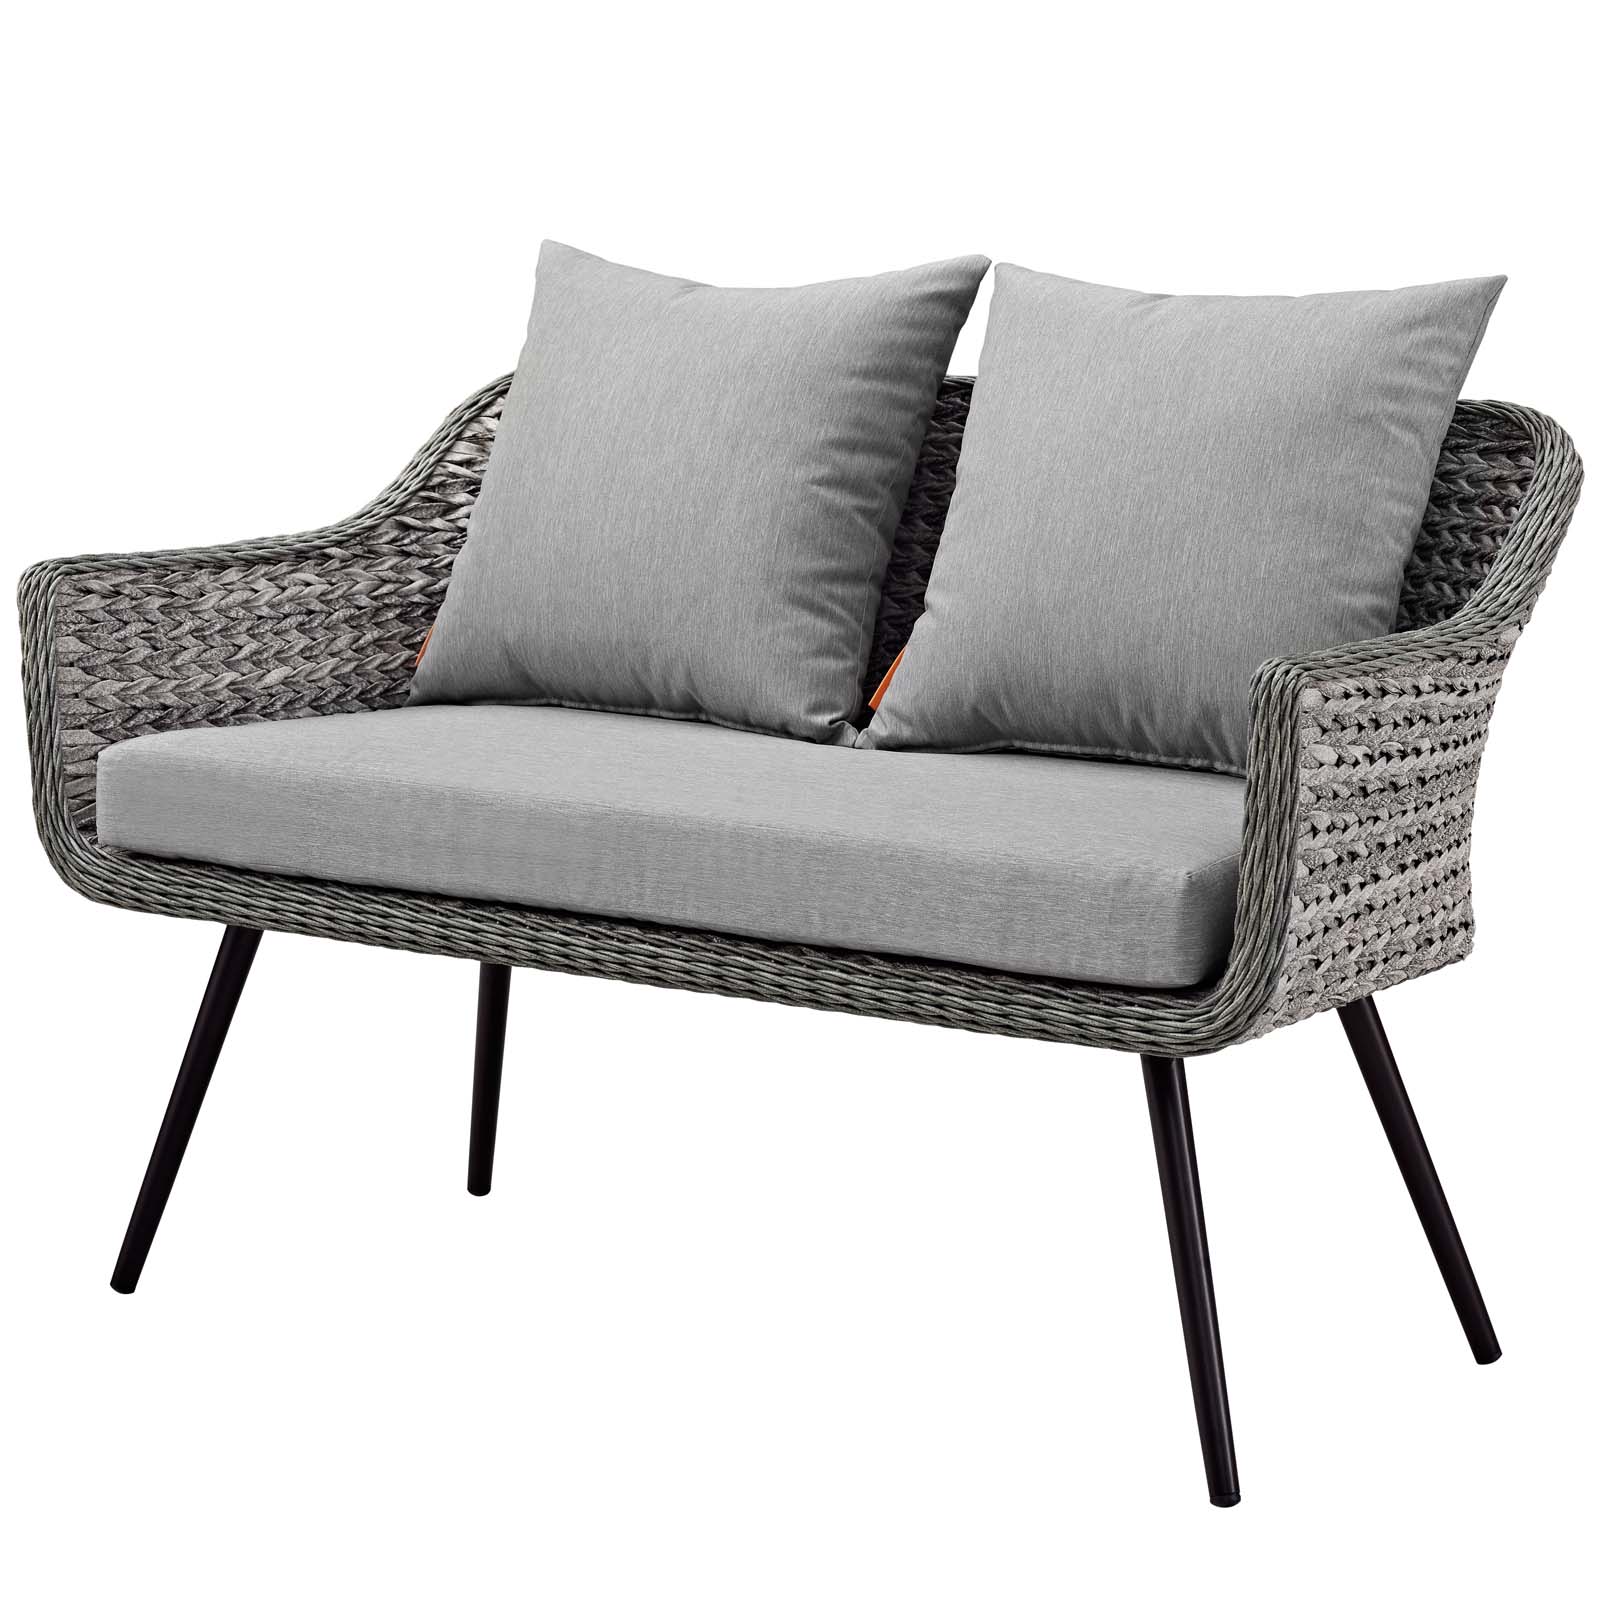 Contemporary Modern Urban Designer Outdoor Patio Balcony Garden Furniture Lounge Sofa and Chair Set, Aluminum Fabric Wicker Rattan, Grey Gray - image 4 of 8